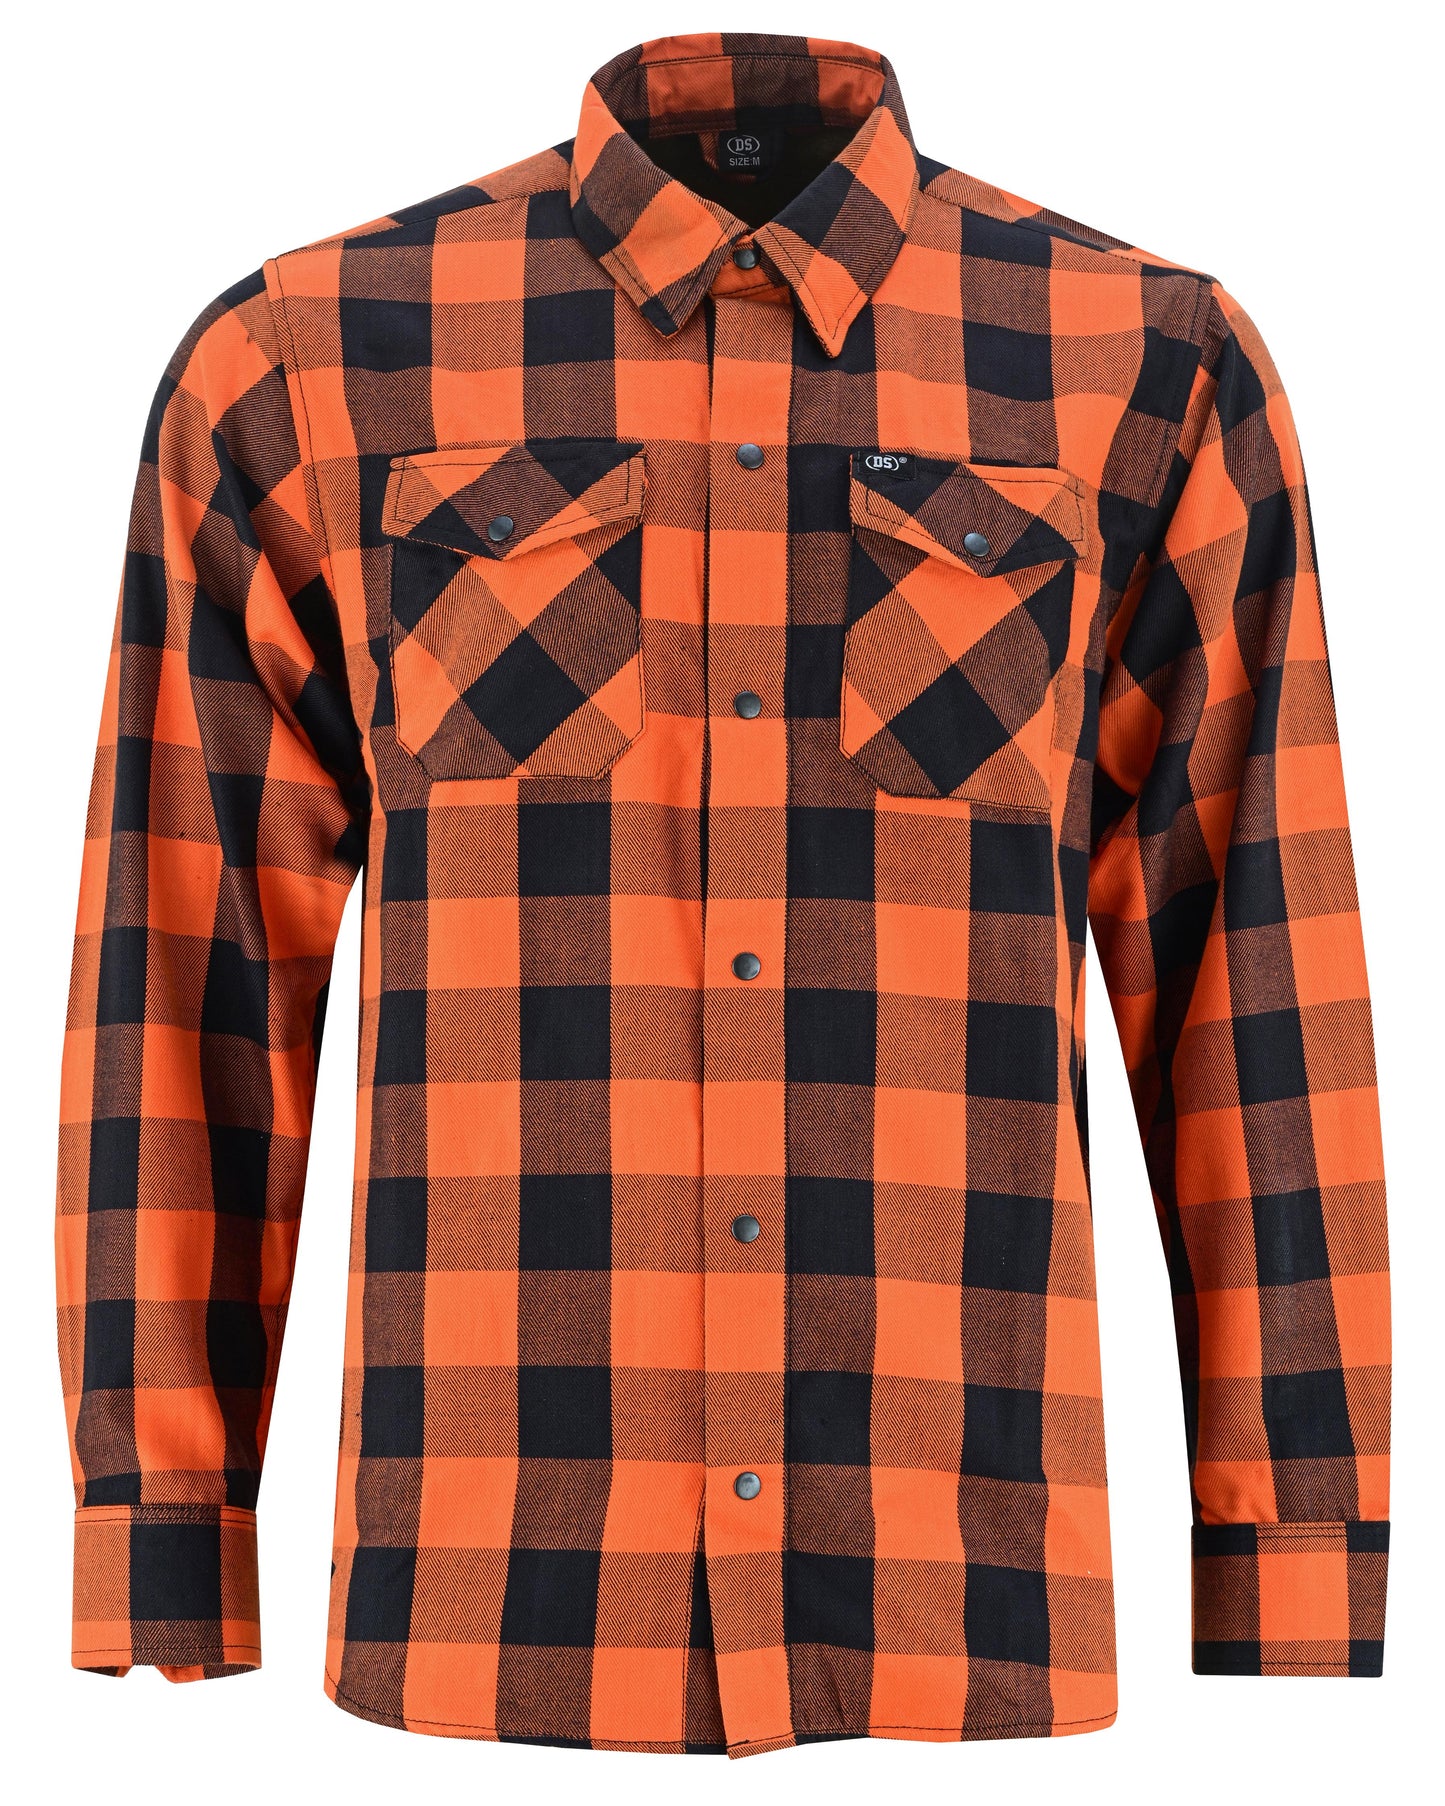 Flannel Shirt - Orange and Black